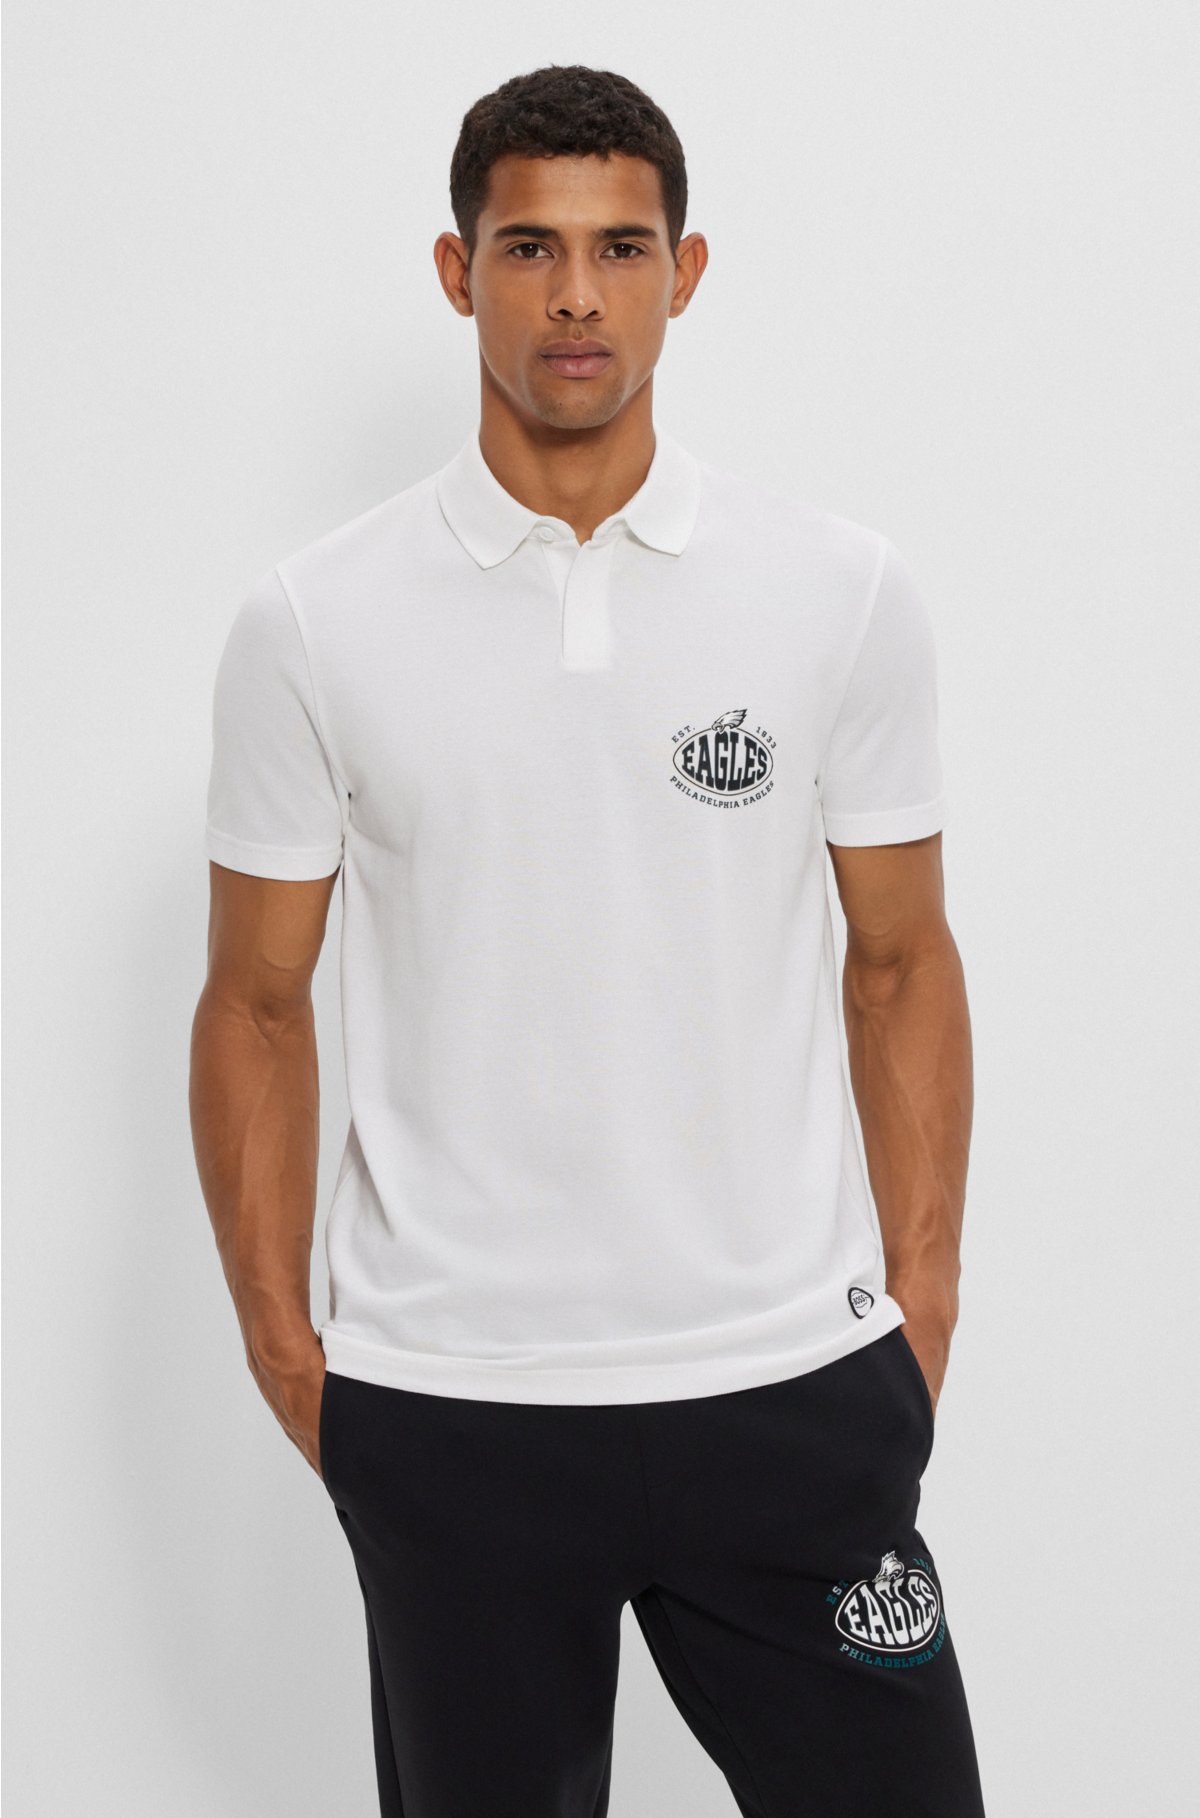 BOSS x NFL cotton-piqué polo shirt with collaborative branding, Eagles